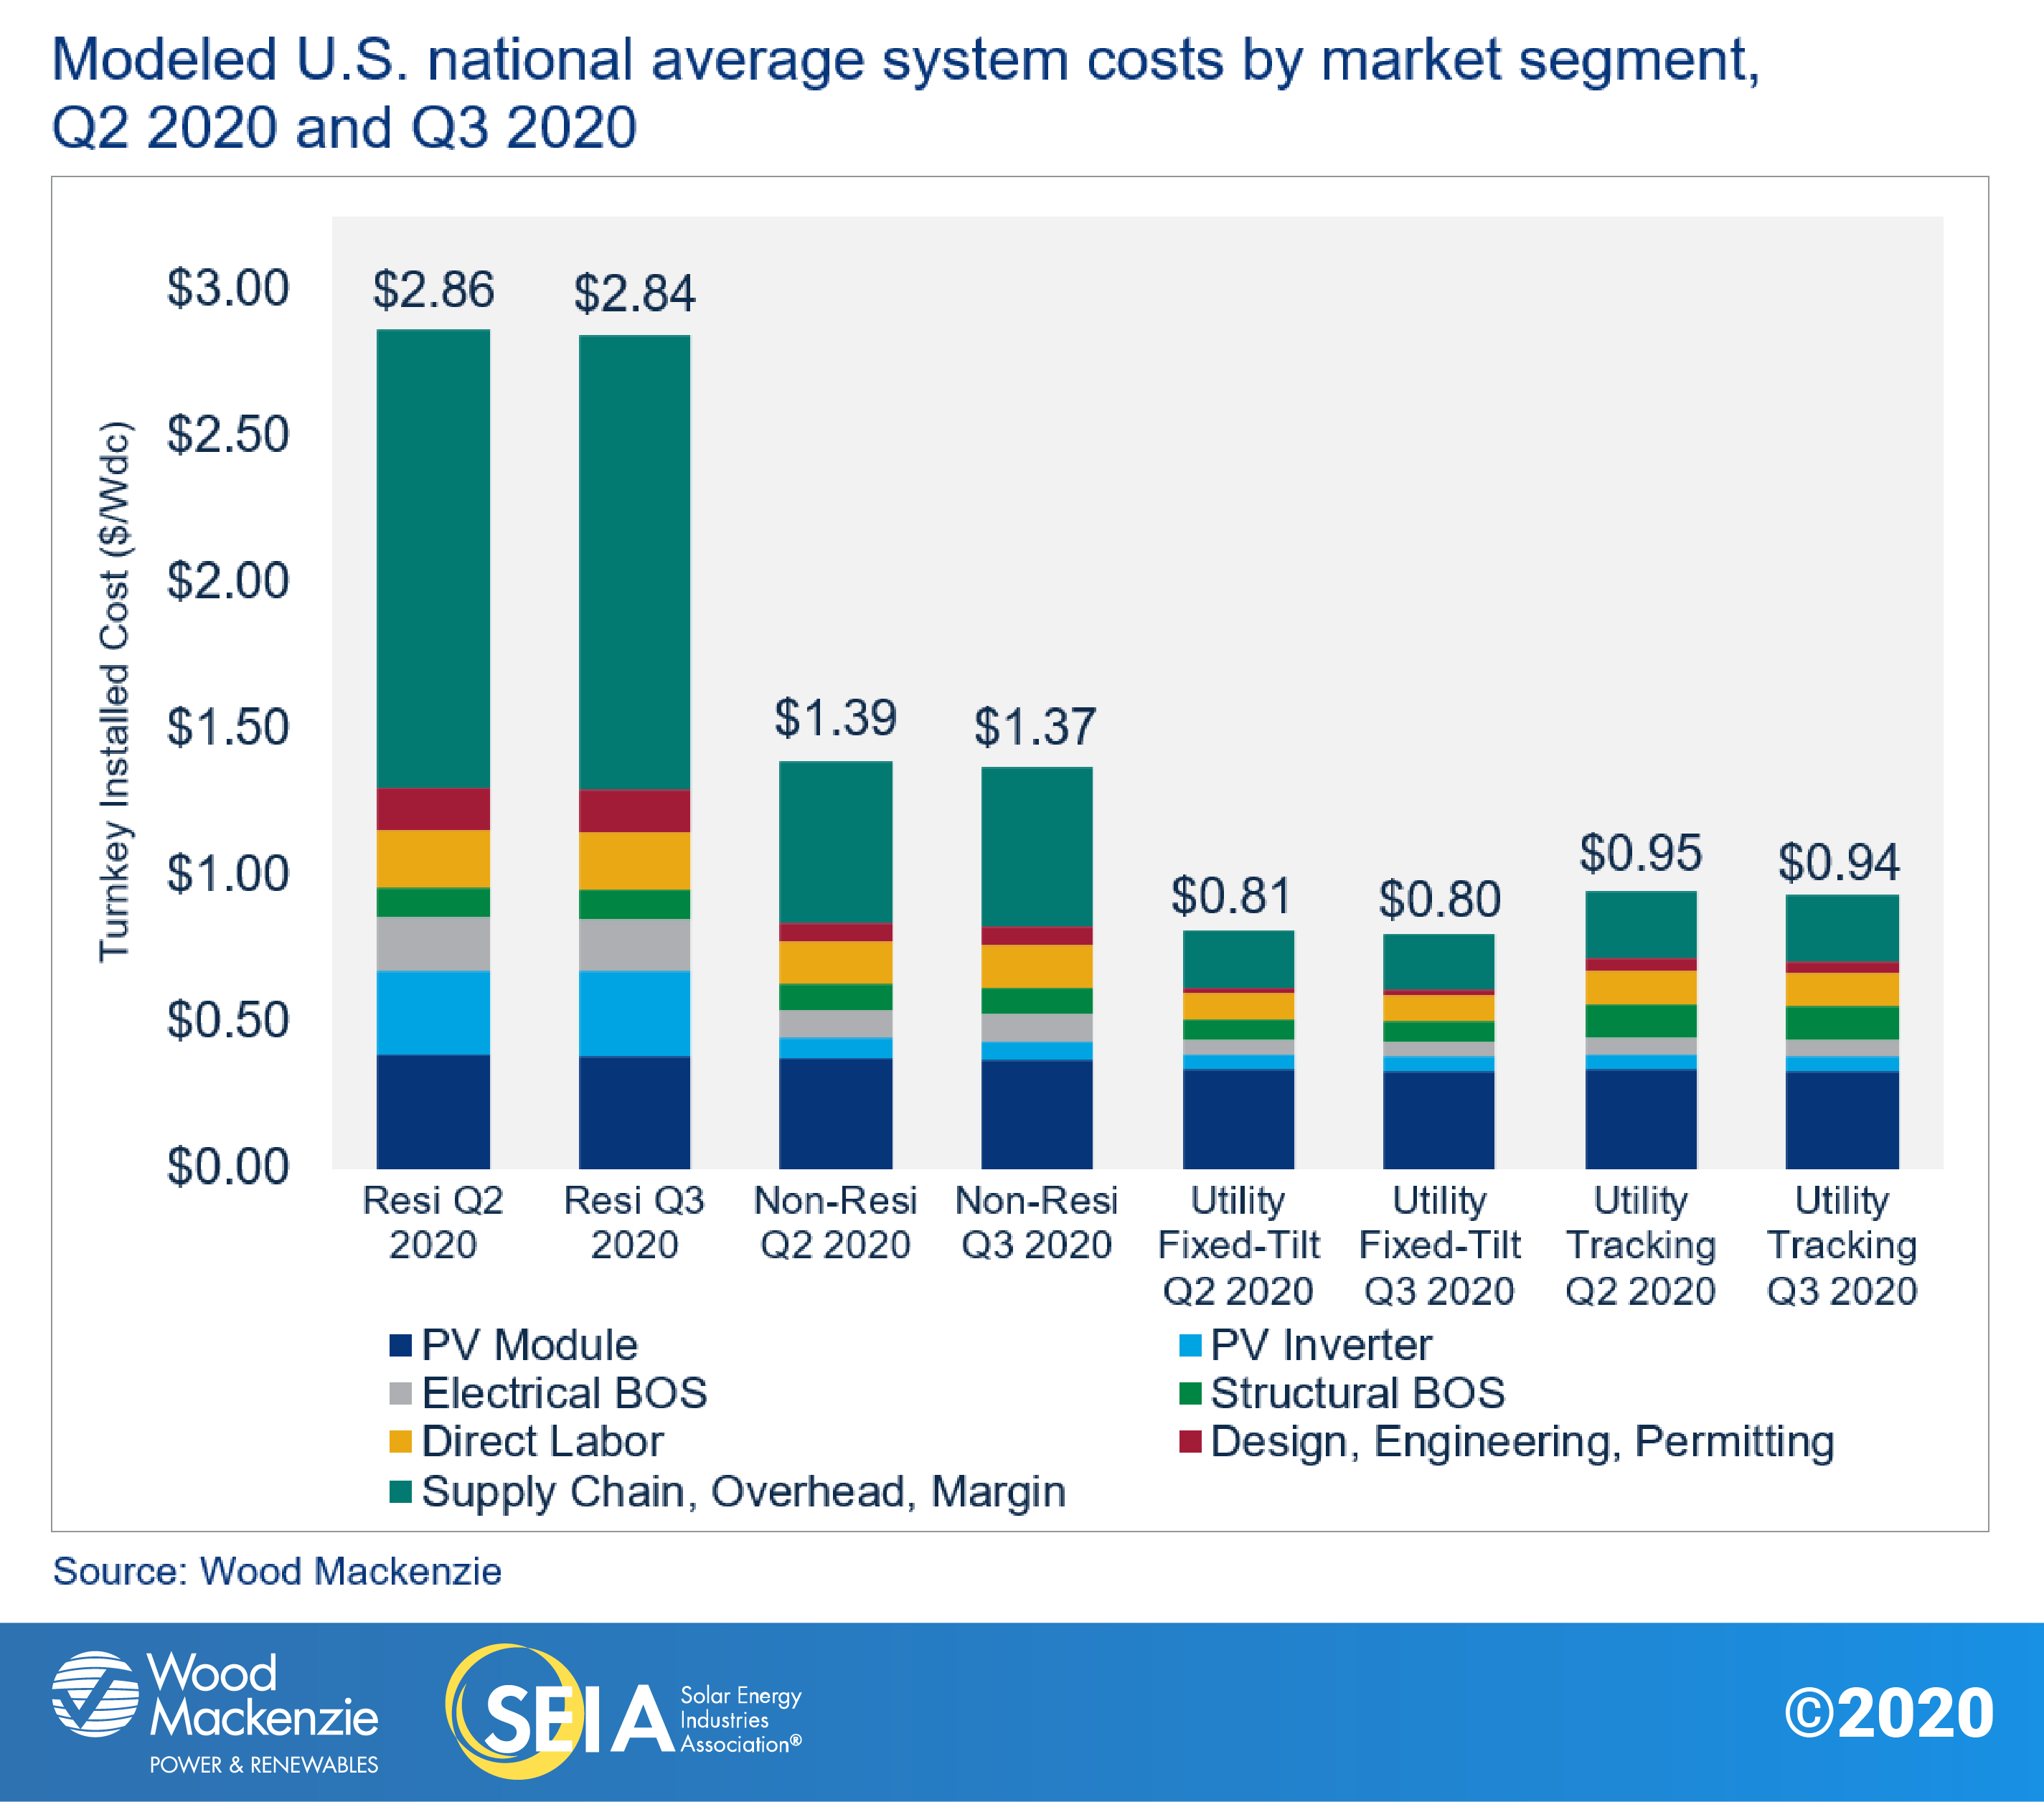 Modeled U.S. national average system costs by market segment chart